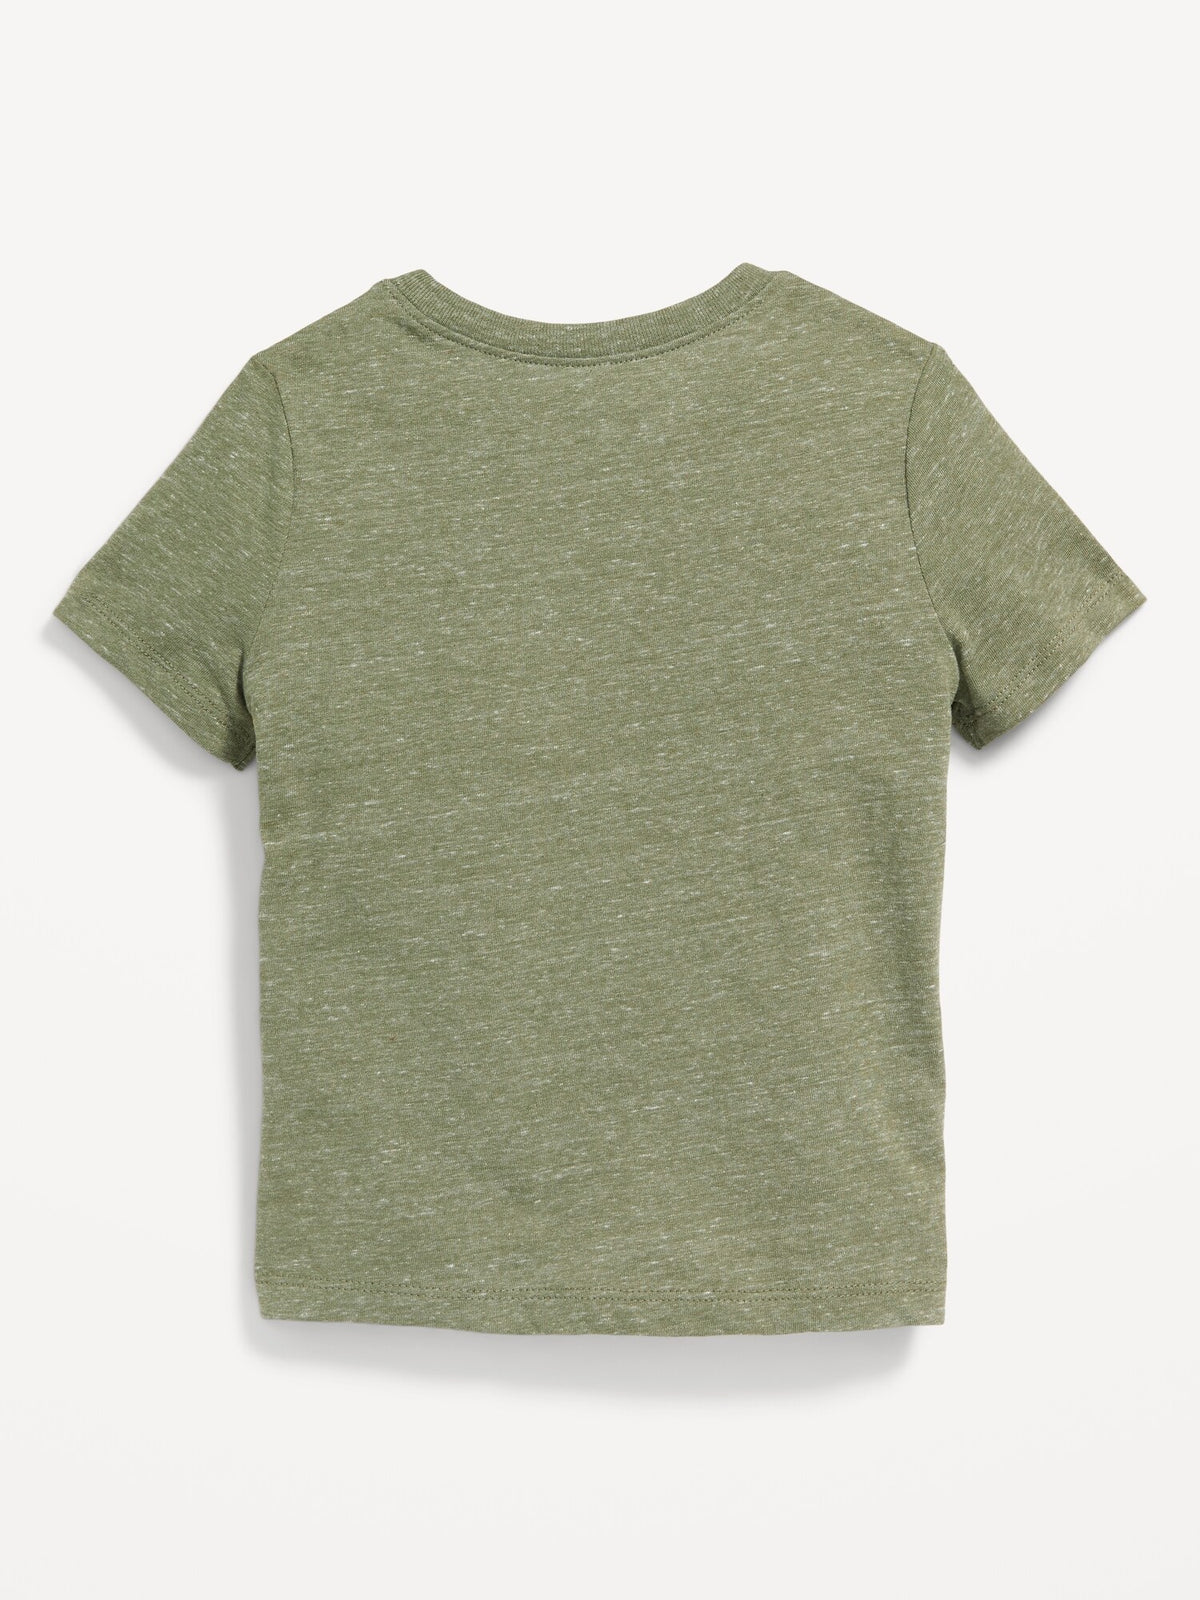 Unisex Short-Sleeve Slub-Knit T-Shirt for Toddler